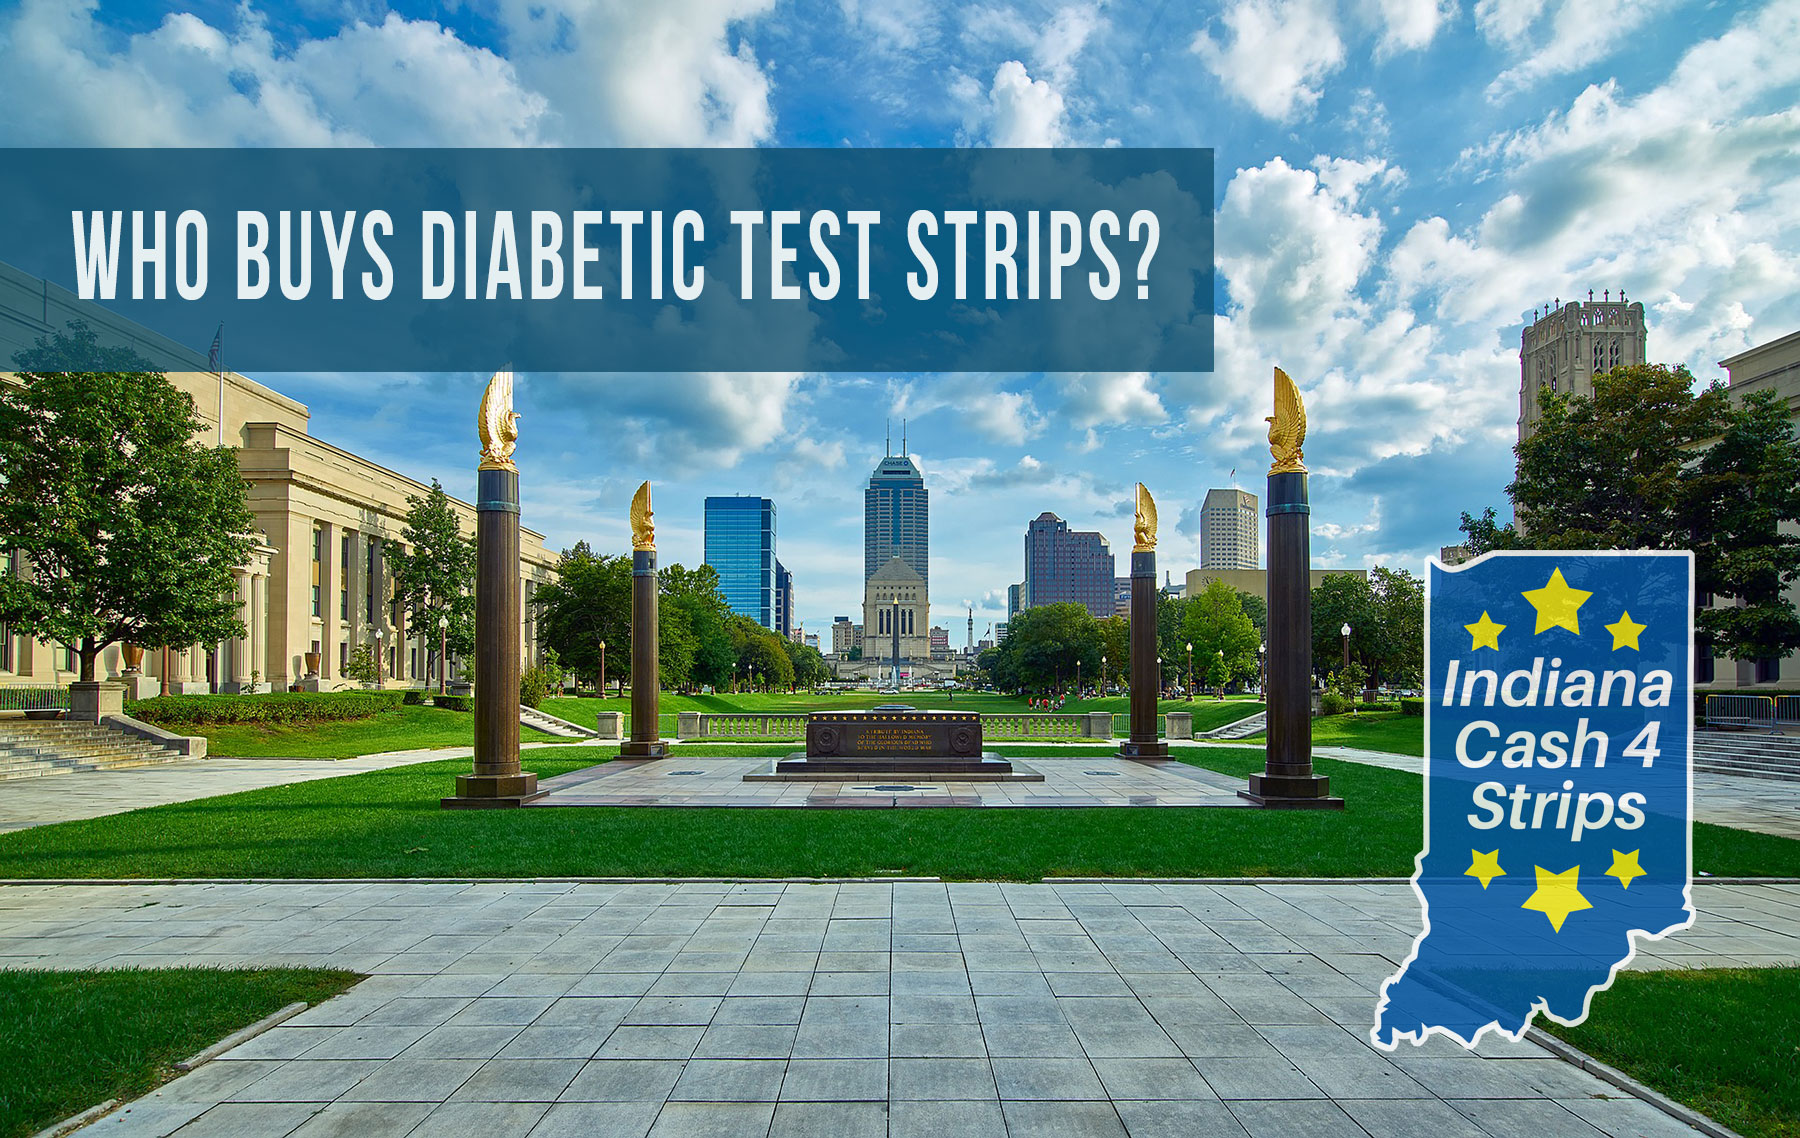 Who buys diabetic test strips?